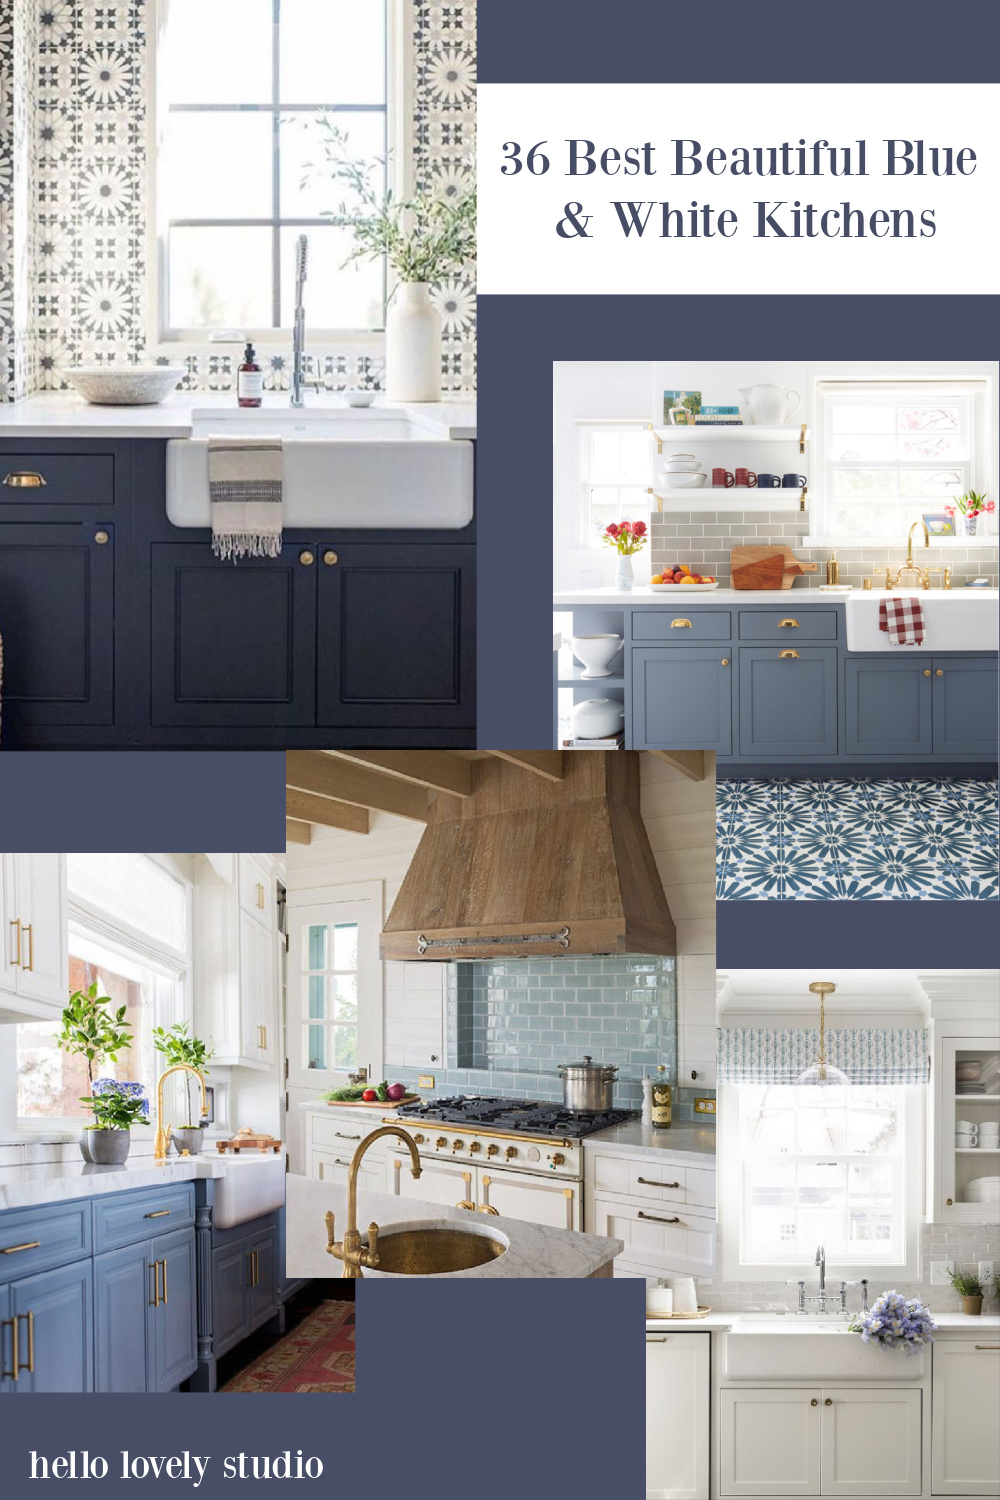 36 Best Beautiful Blue and White Kitchens - Hello Lovely Studio. #bluekitchens #kitchendesign #bluepaintcolors #interiordesign #blueandwhite #kitchendecor